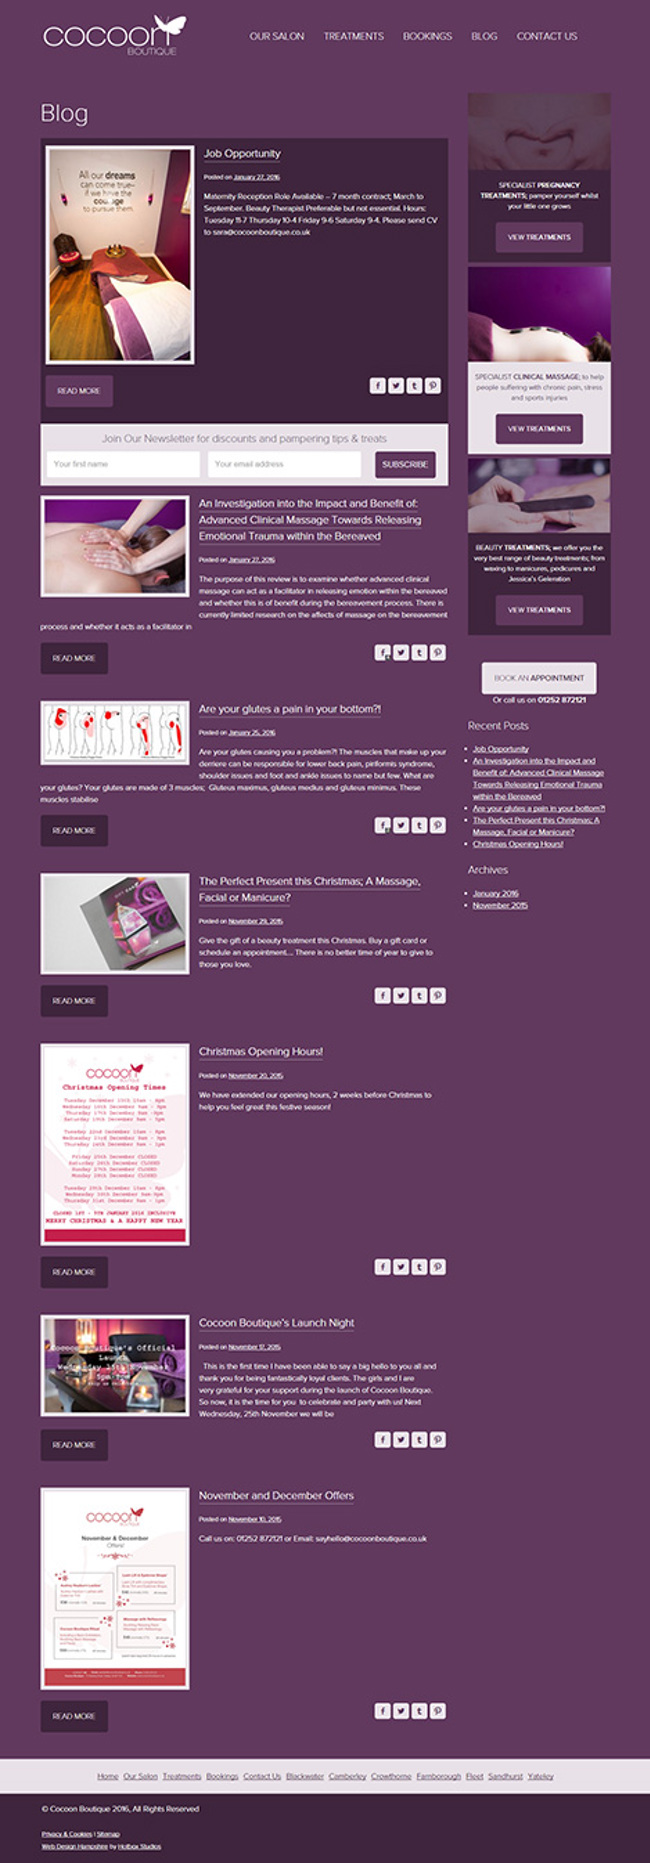 Cocoon Boutique Web Design - Screen print 008 - Blog